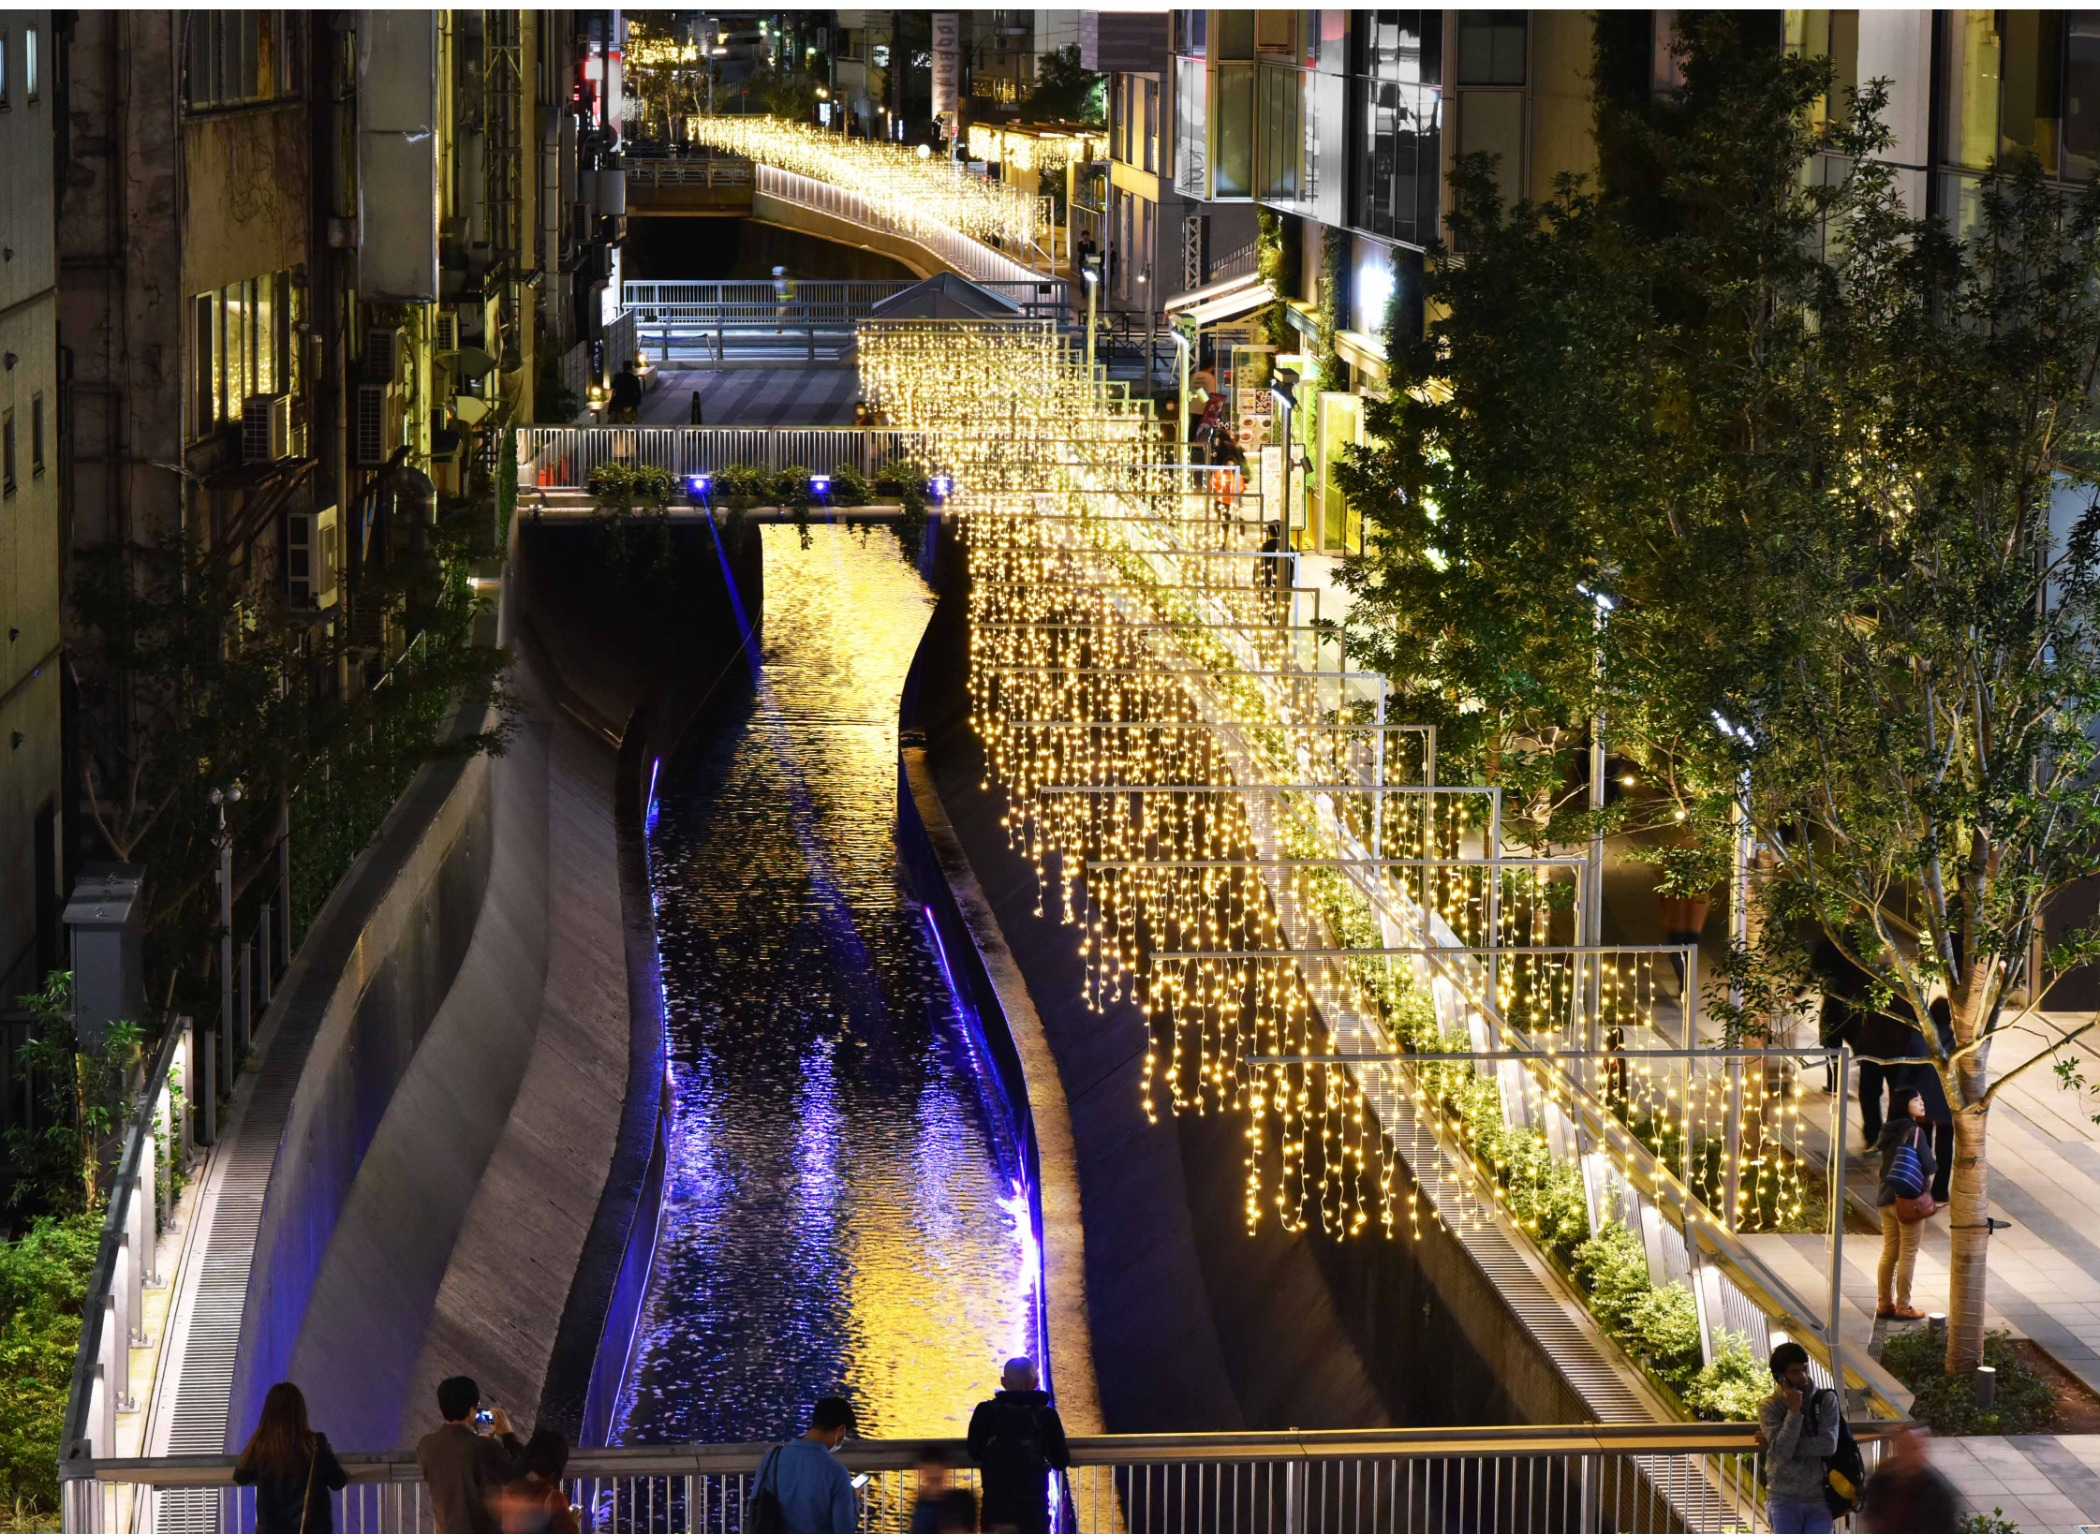 The Shibuya River Christmas illuminations